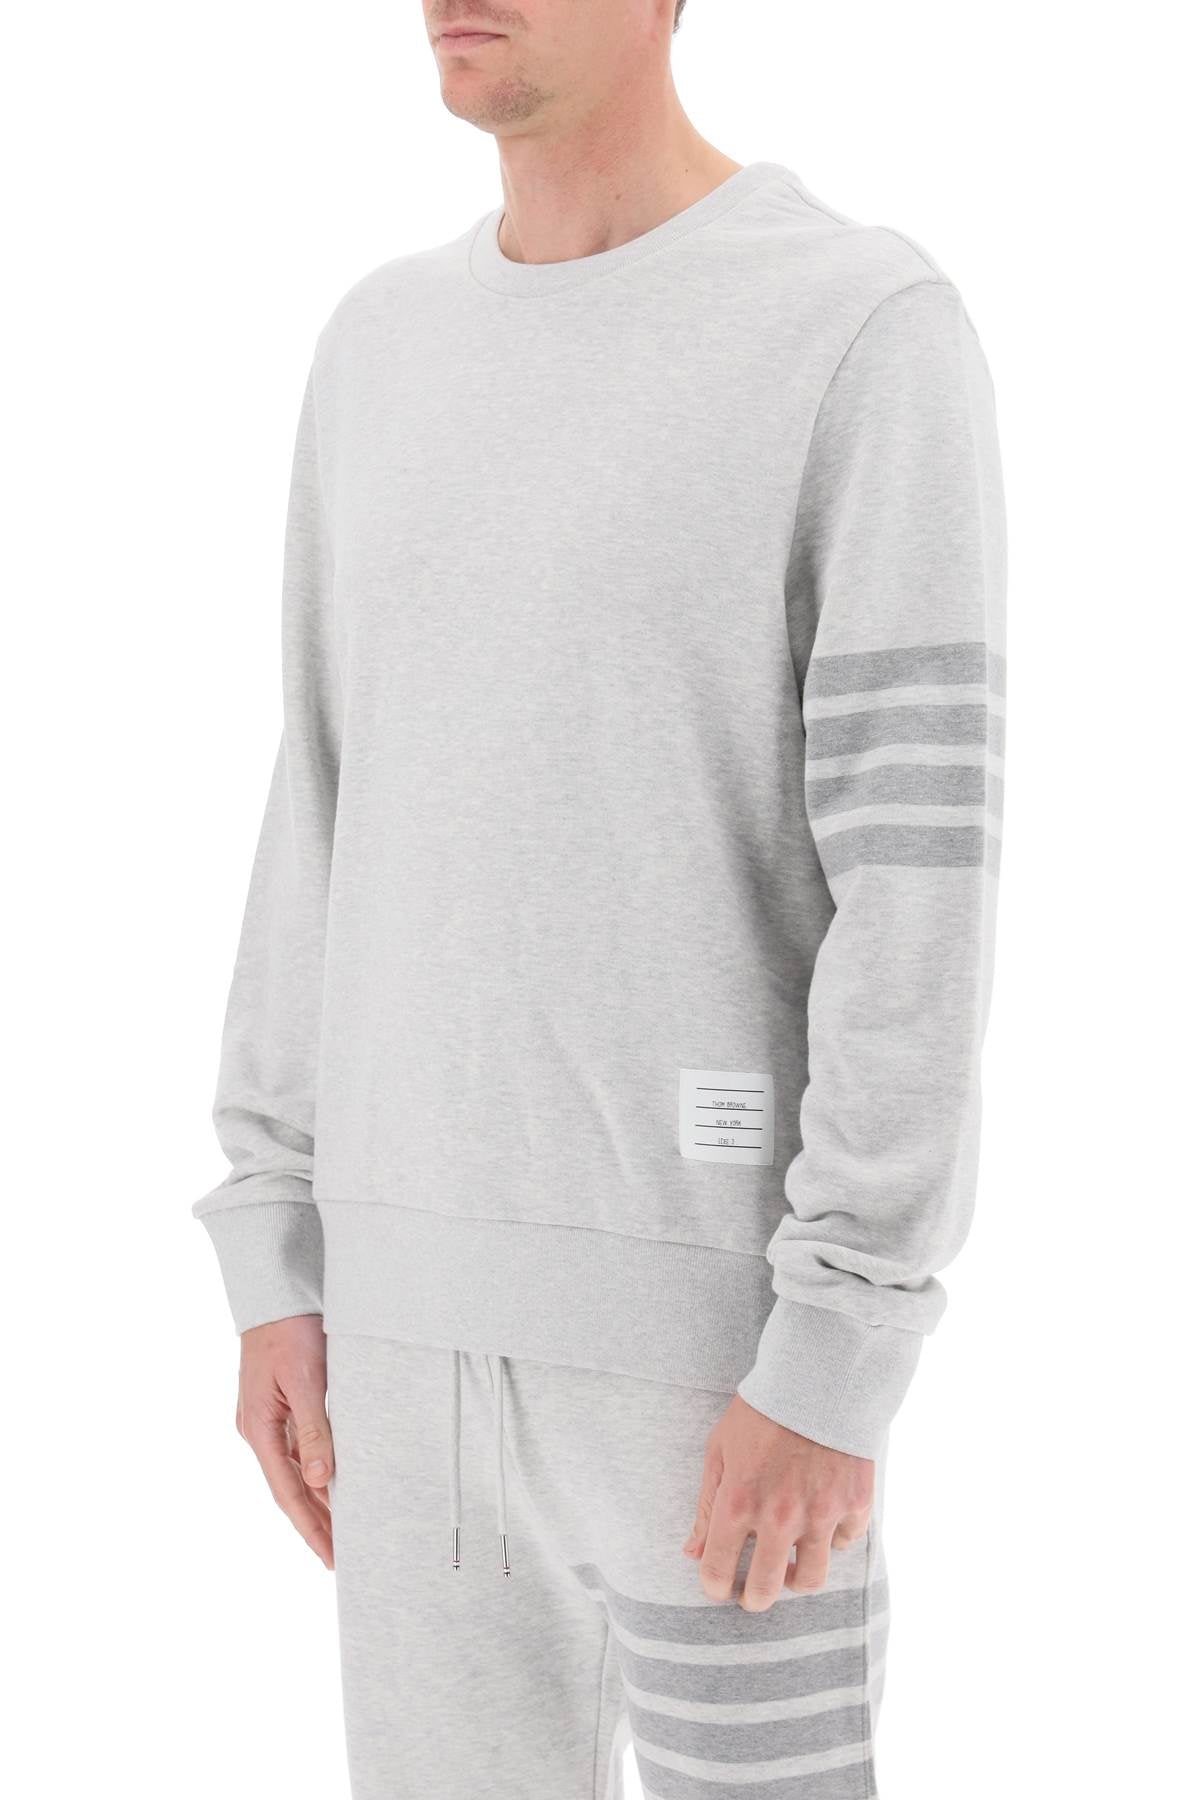 Thom browne cotton 4-bar sweatshirt-3